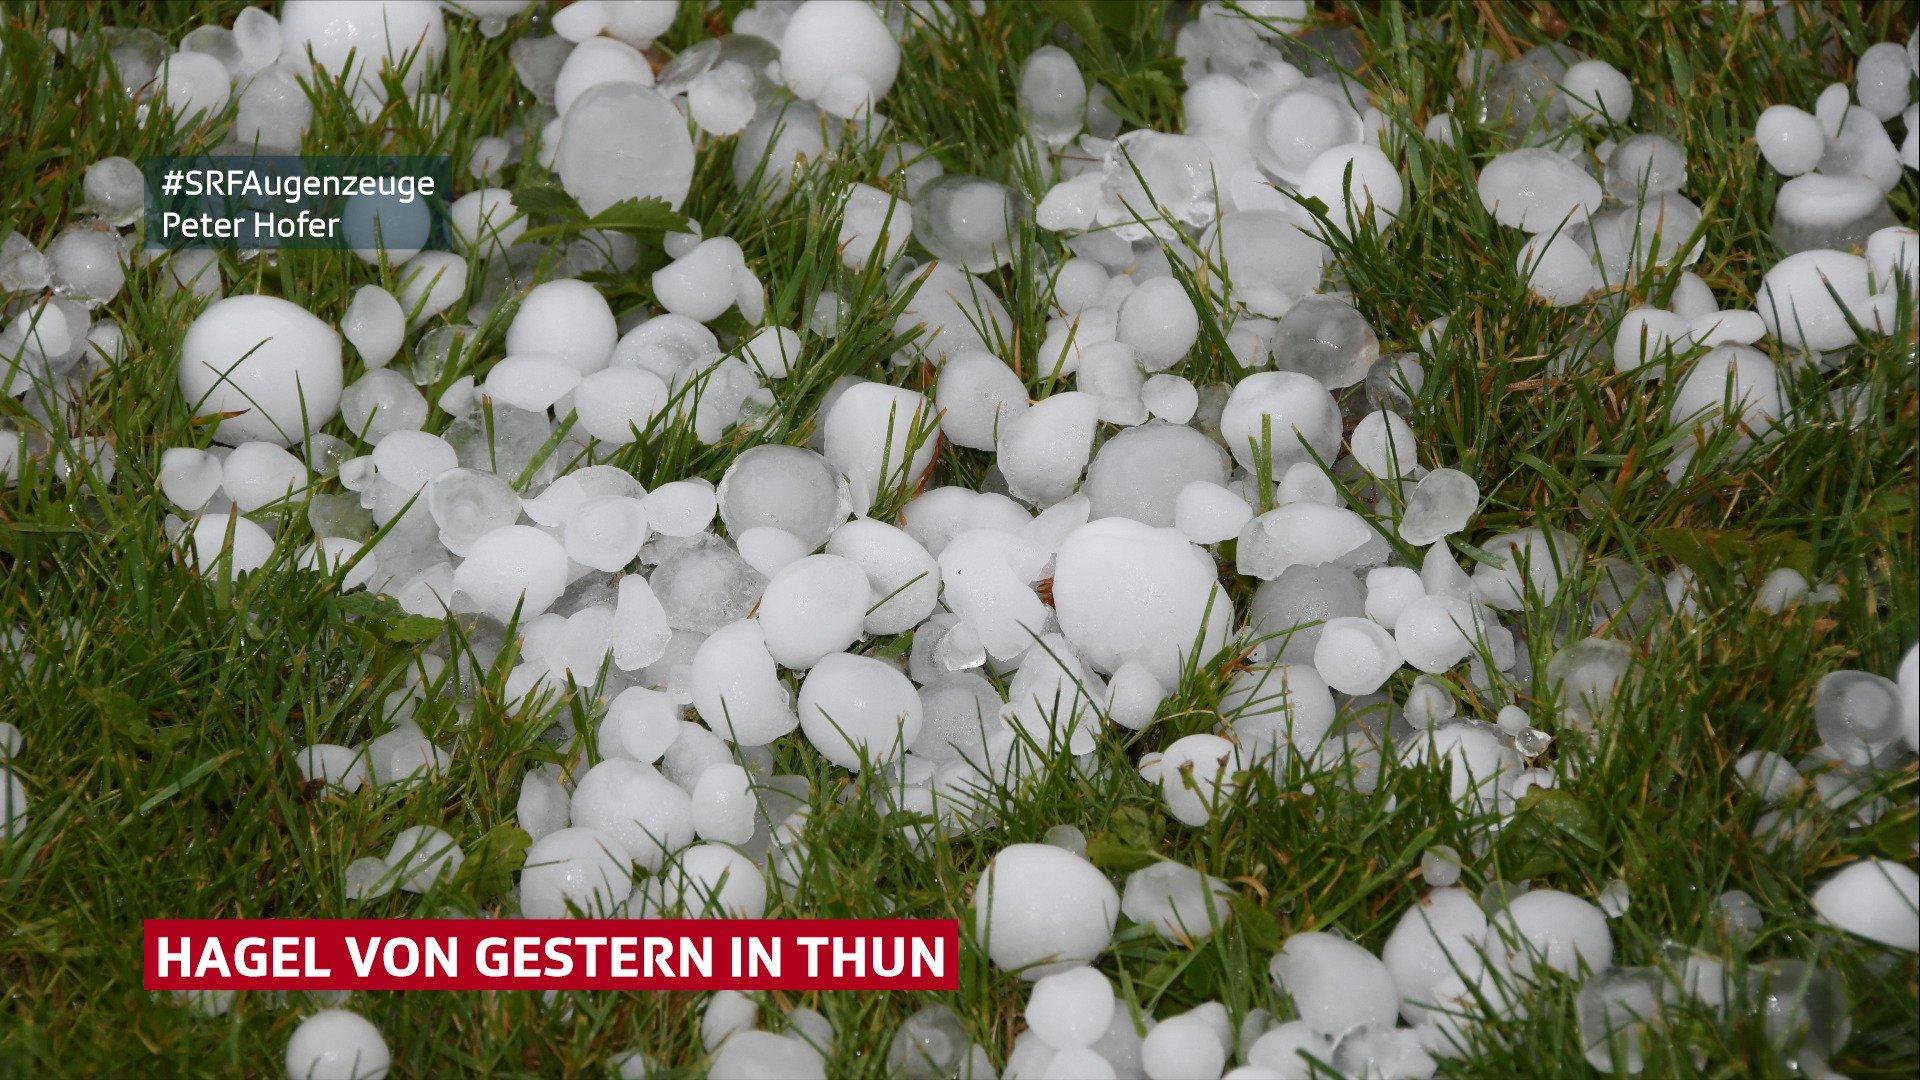 large hailstones lying on grass in Thun